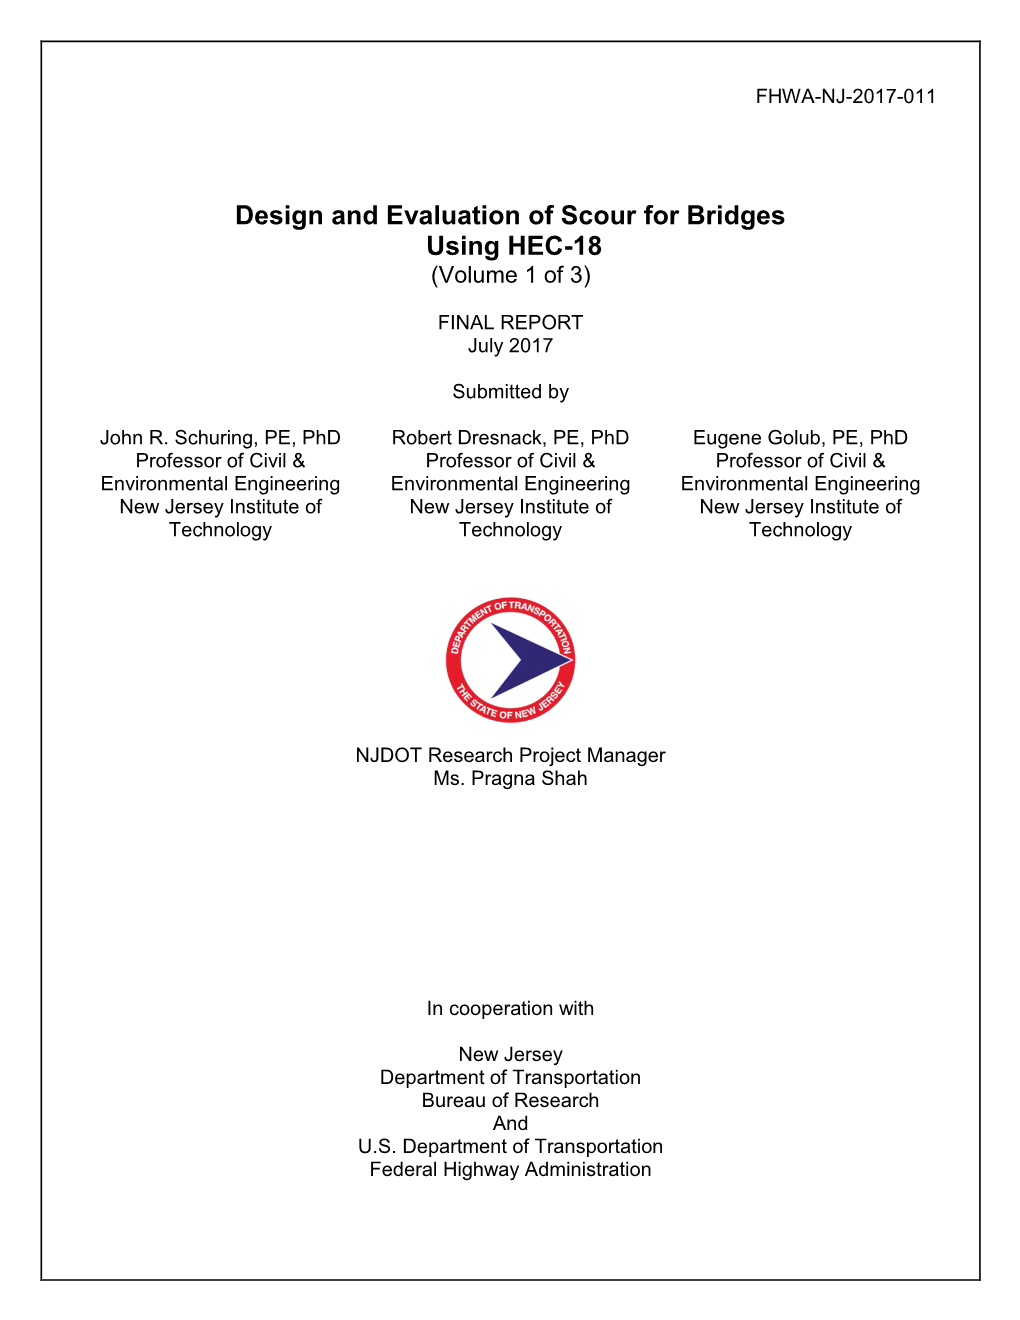 Design and Evaluation of Scour for Bridges Using HEC-18 (Volume 1 of 3)